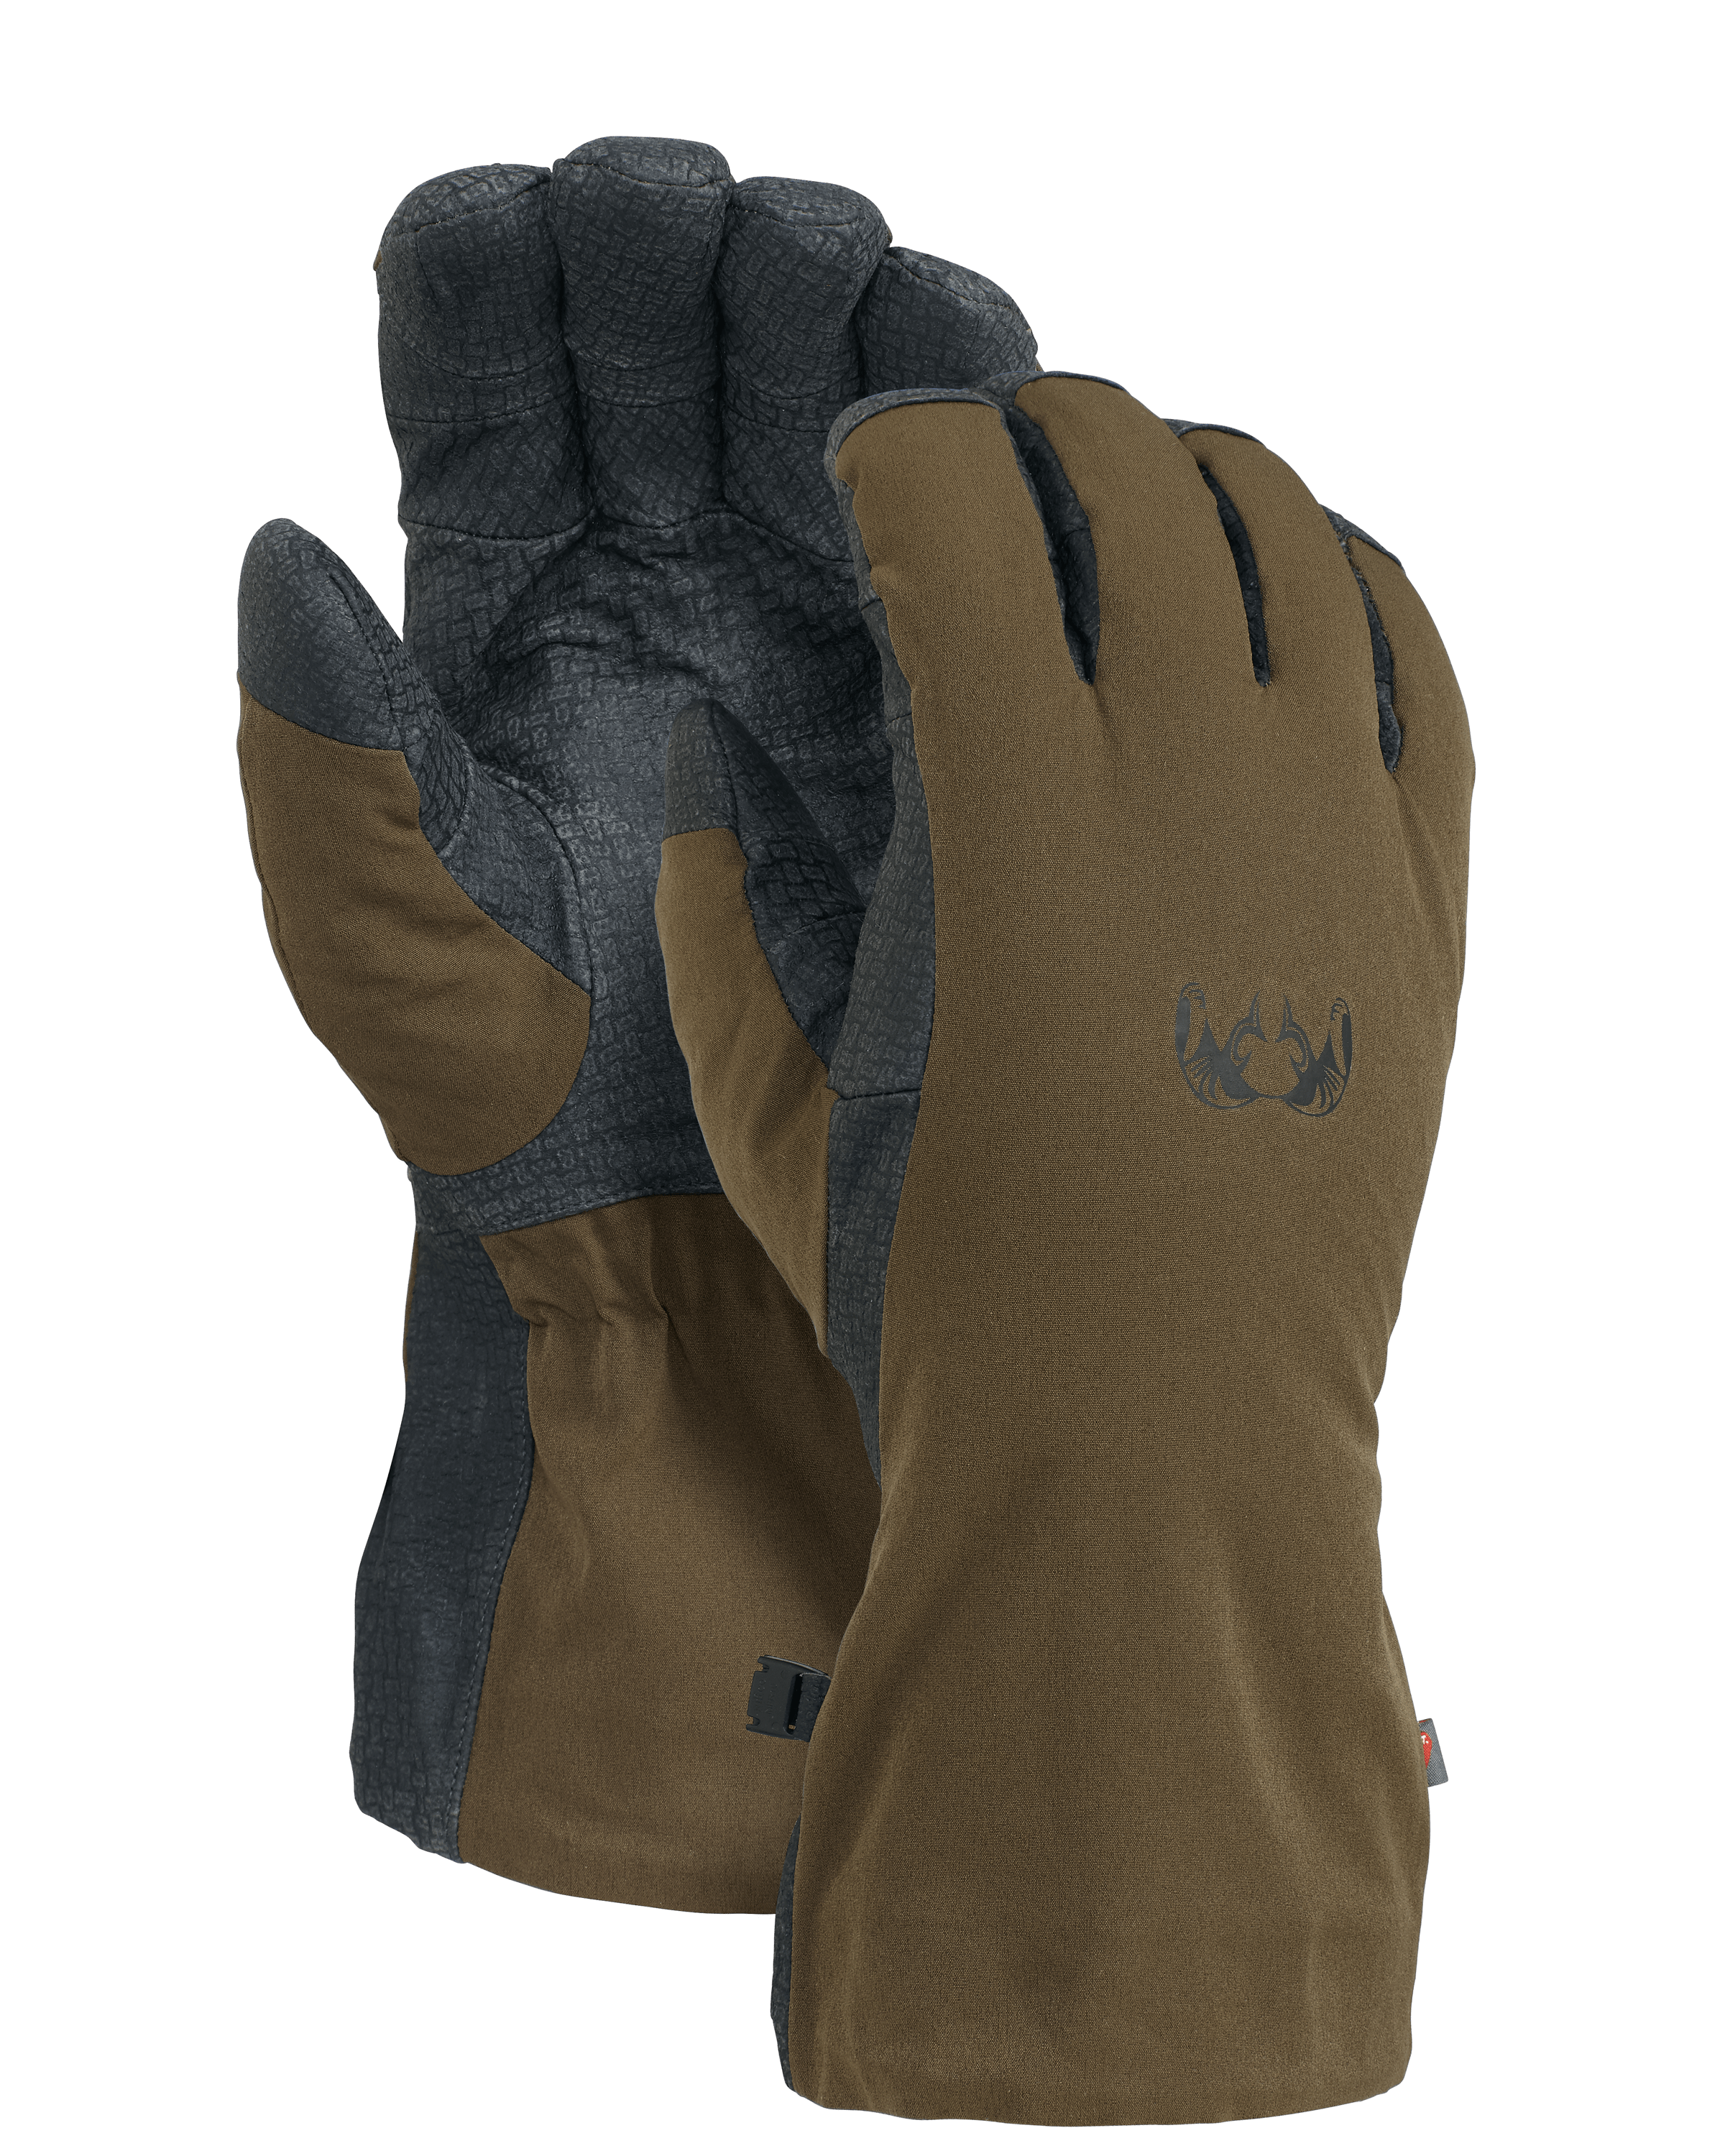 KUIU Northstar Hunting Glove in Bourbon | Size Medium